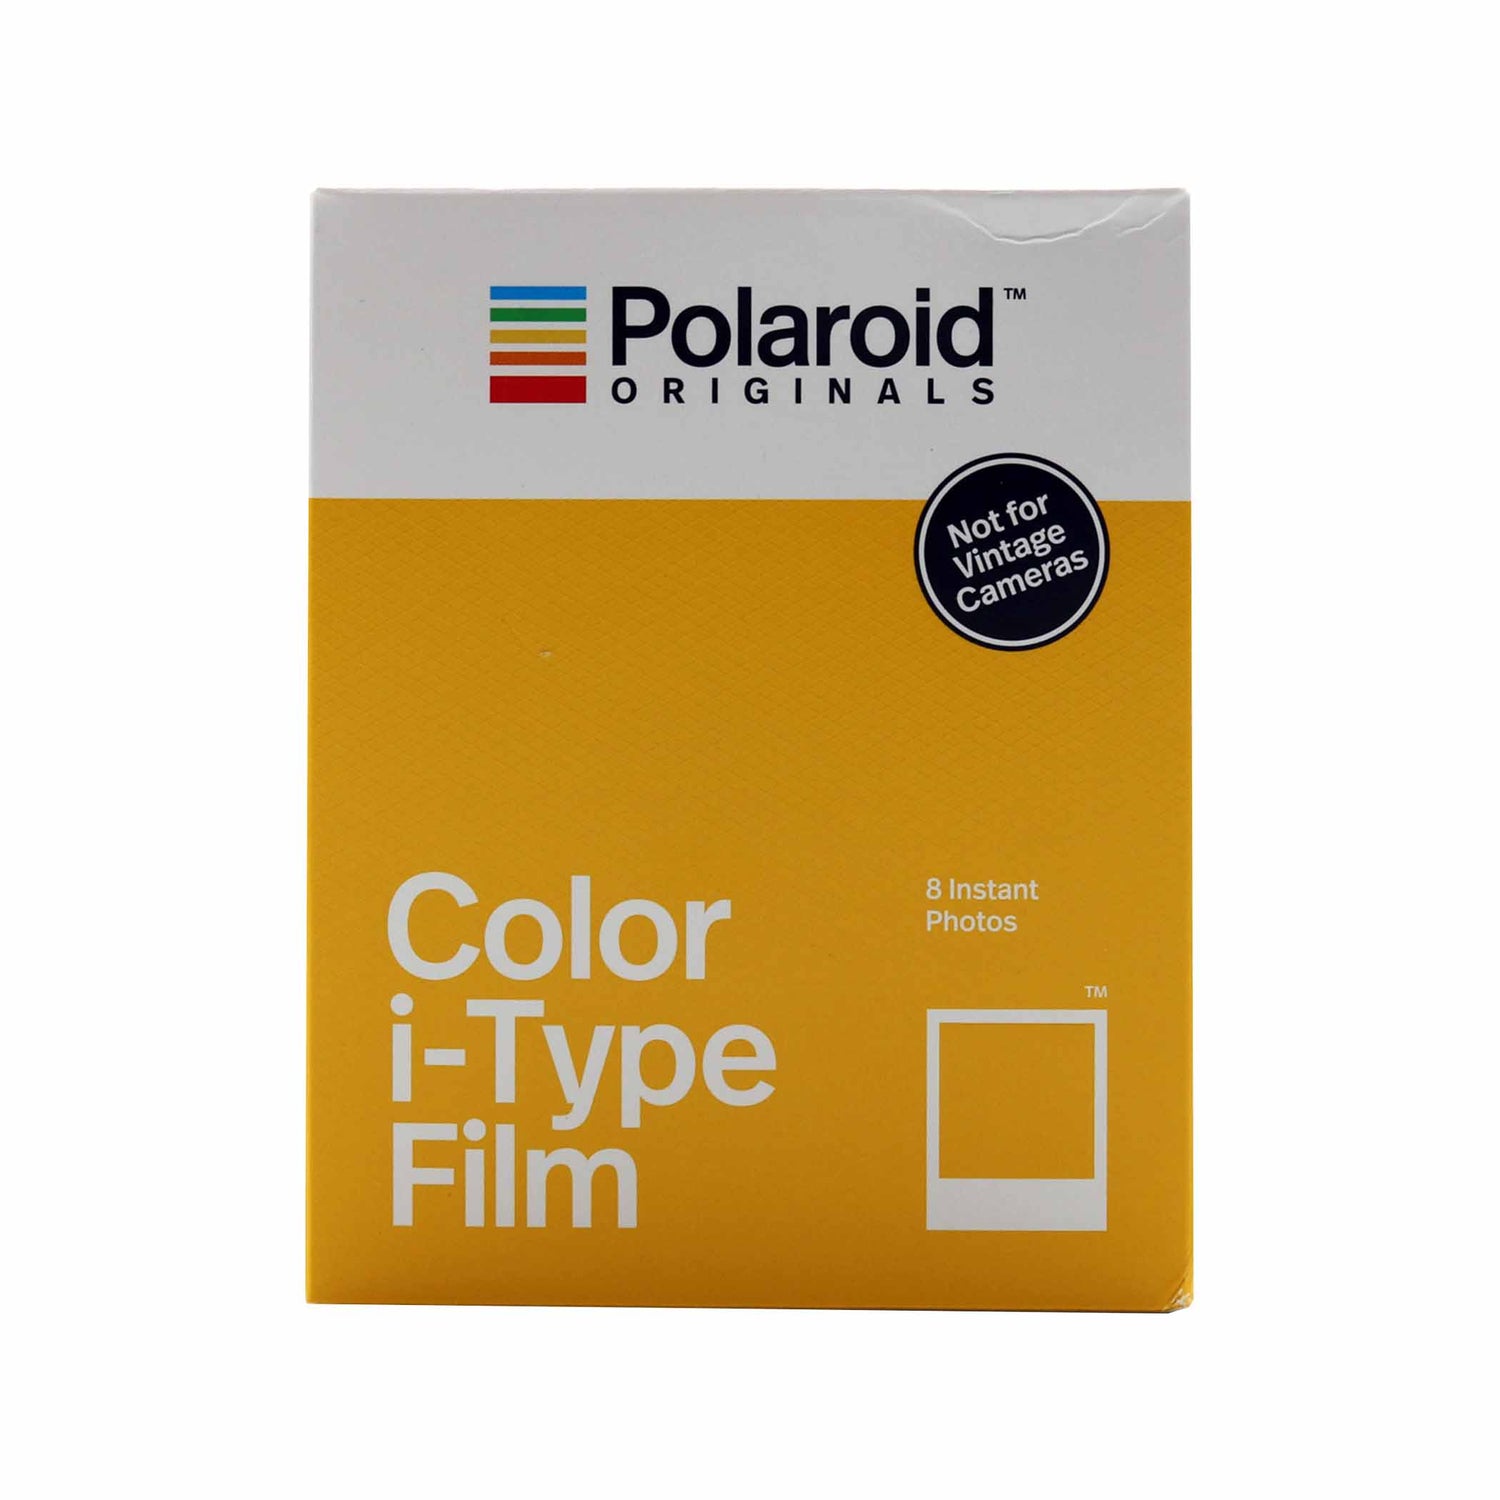 Polaroid i-Type Film – New Orleans Museum of Art Shop